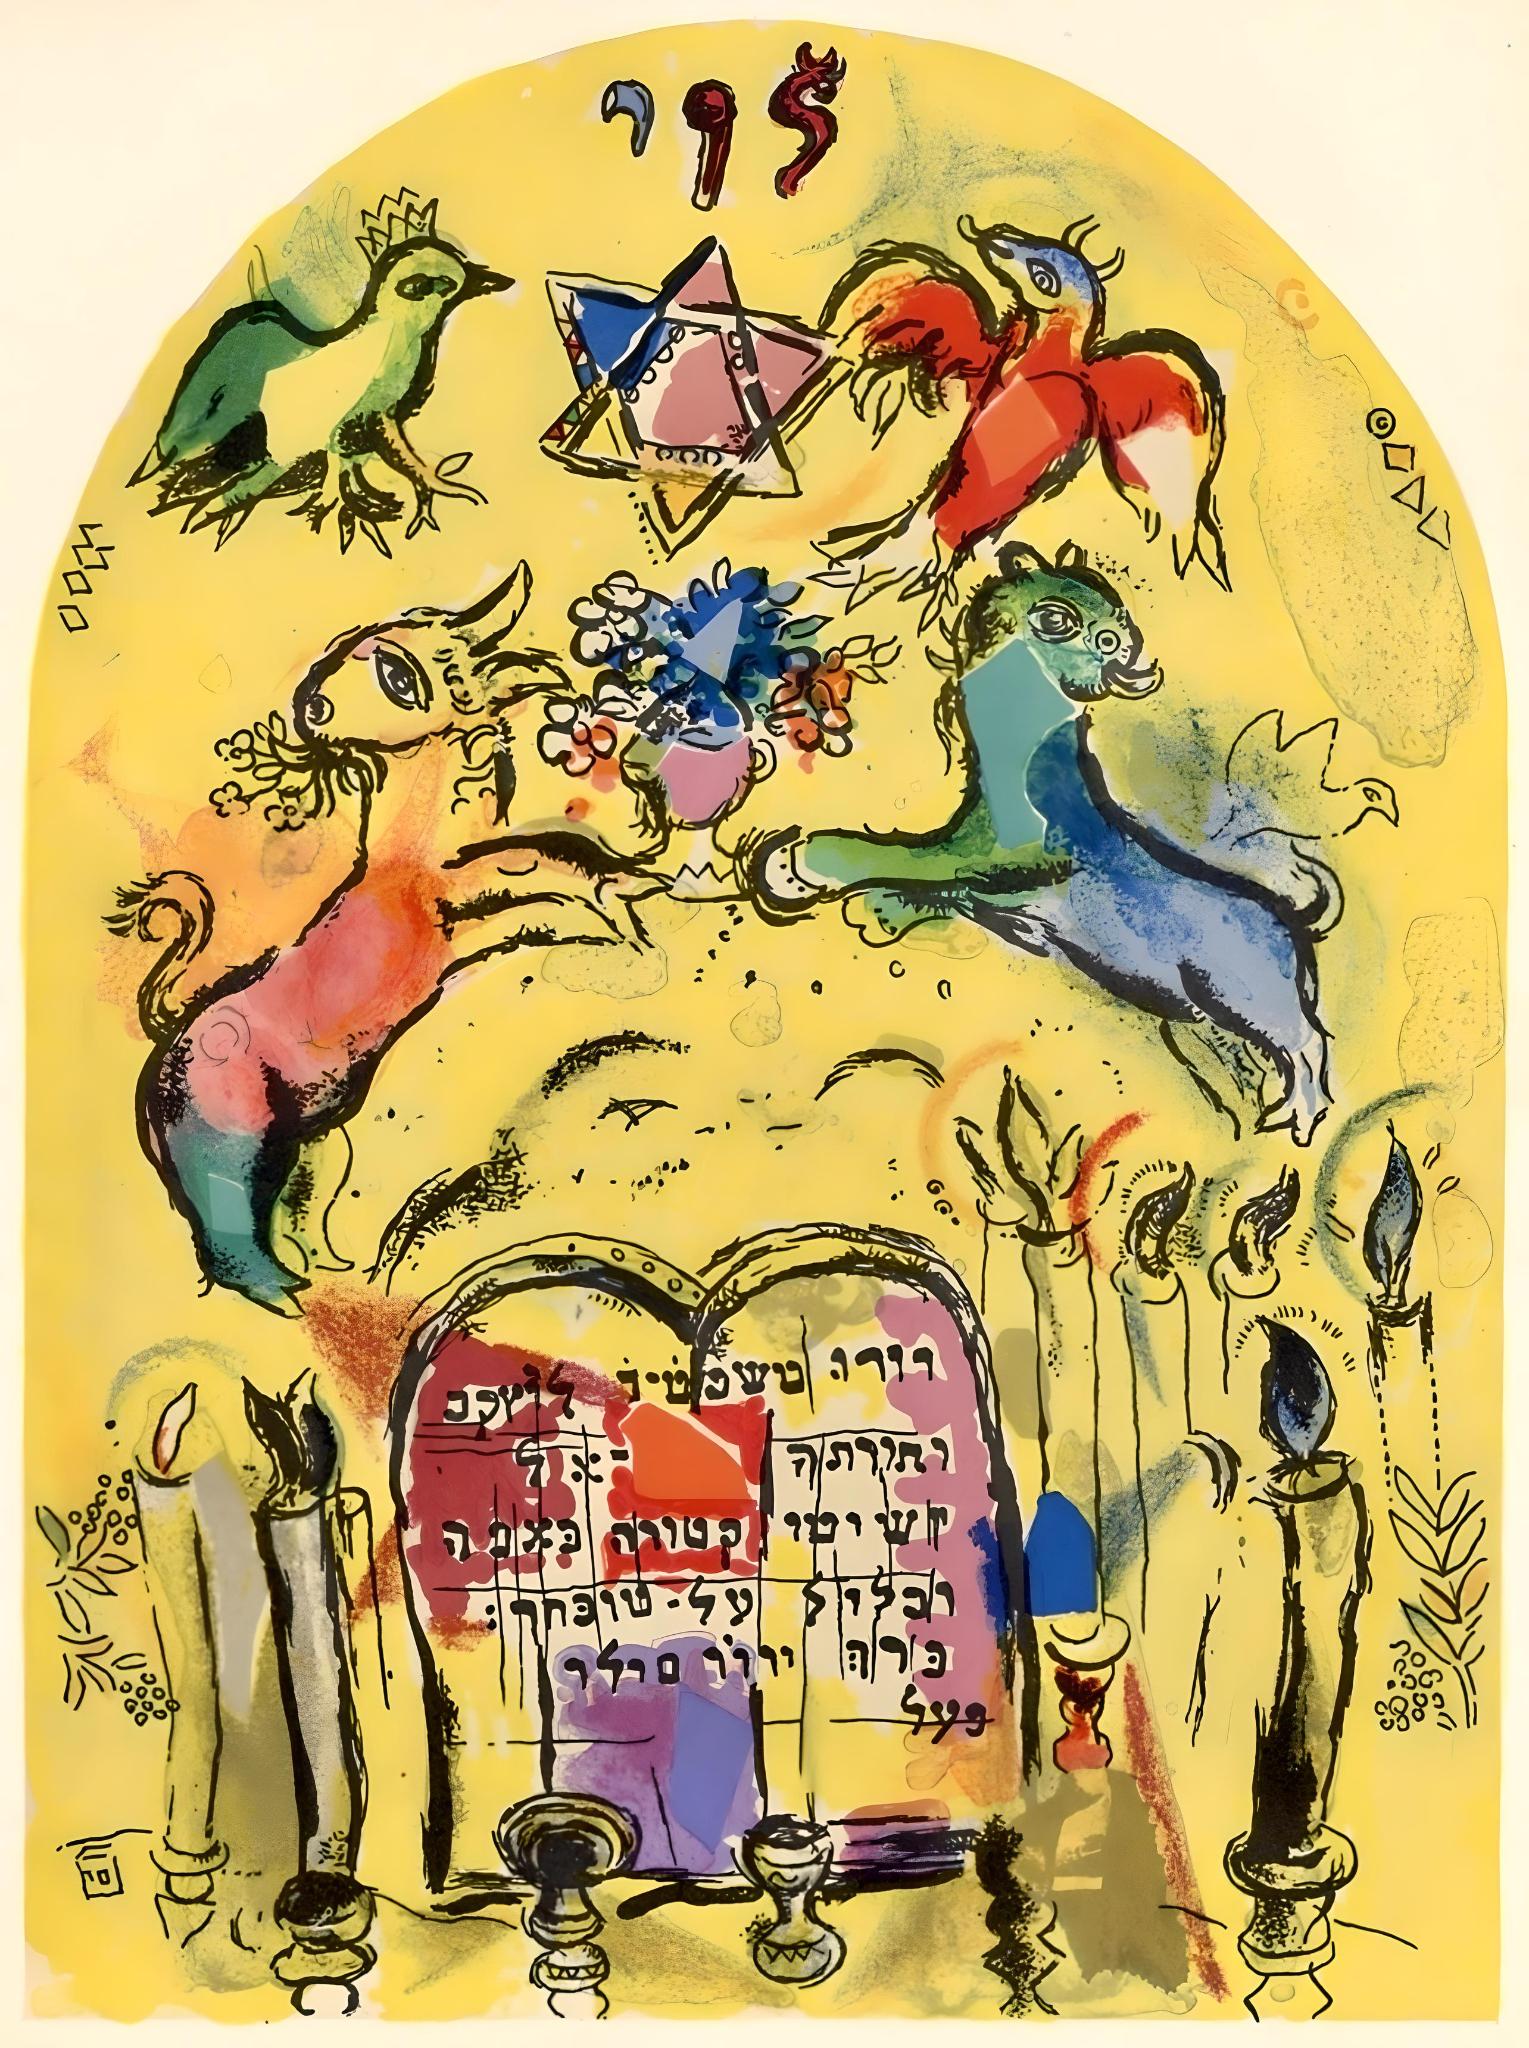 Chagall, Tribe of Levi, Jerusalem Windows (after)